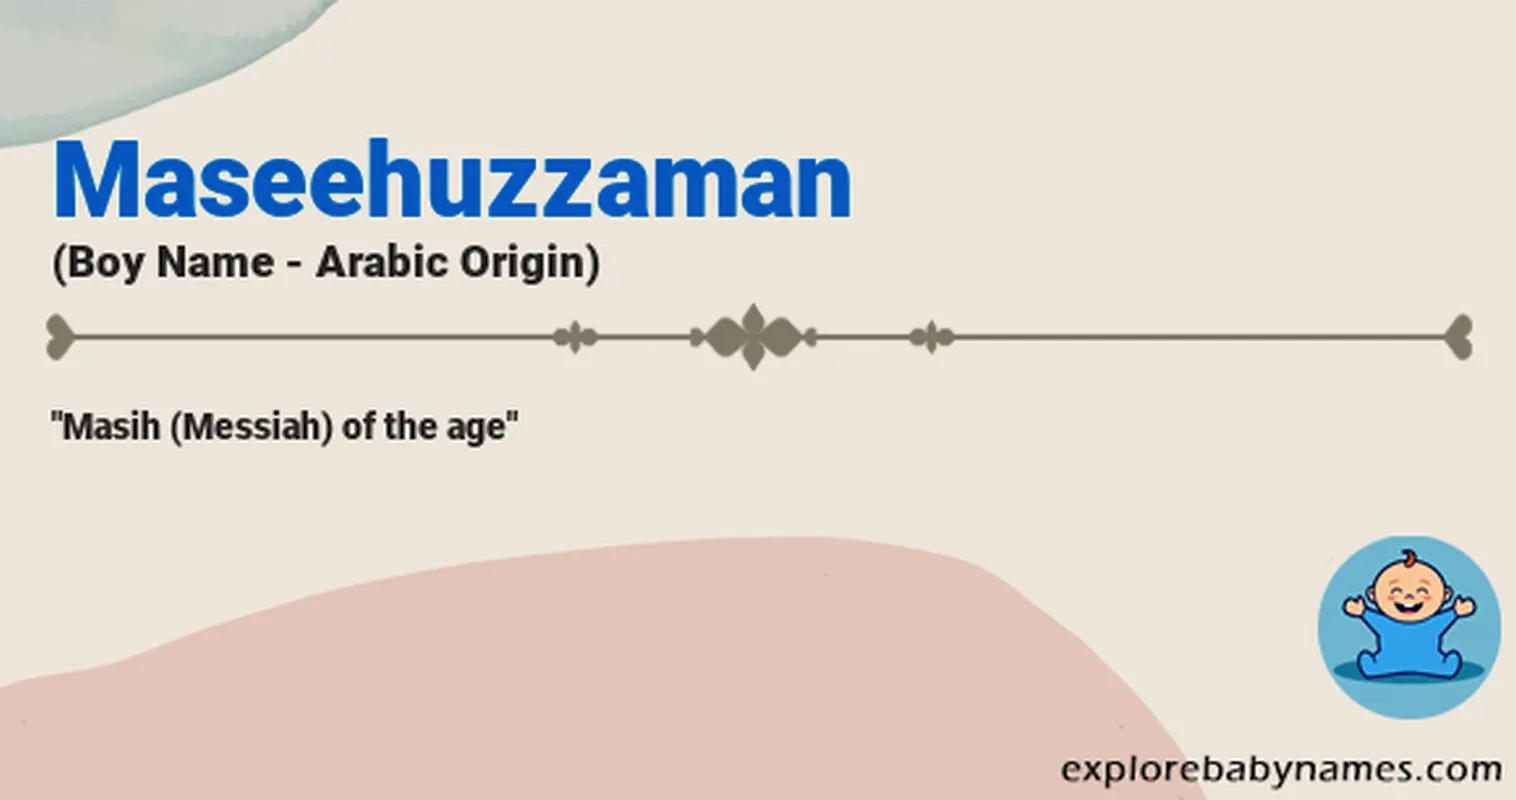 Meaning of Maseehuzzaman